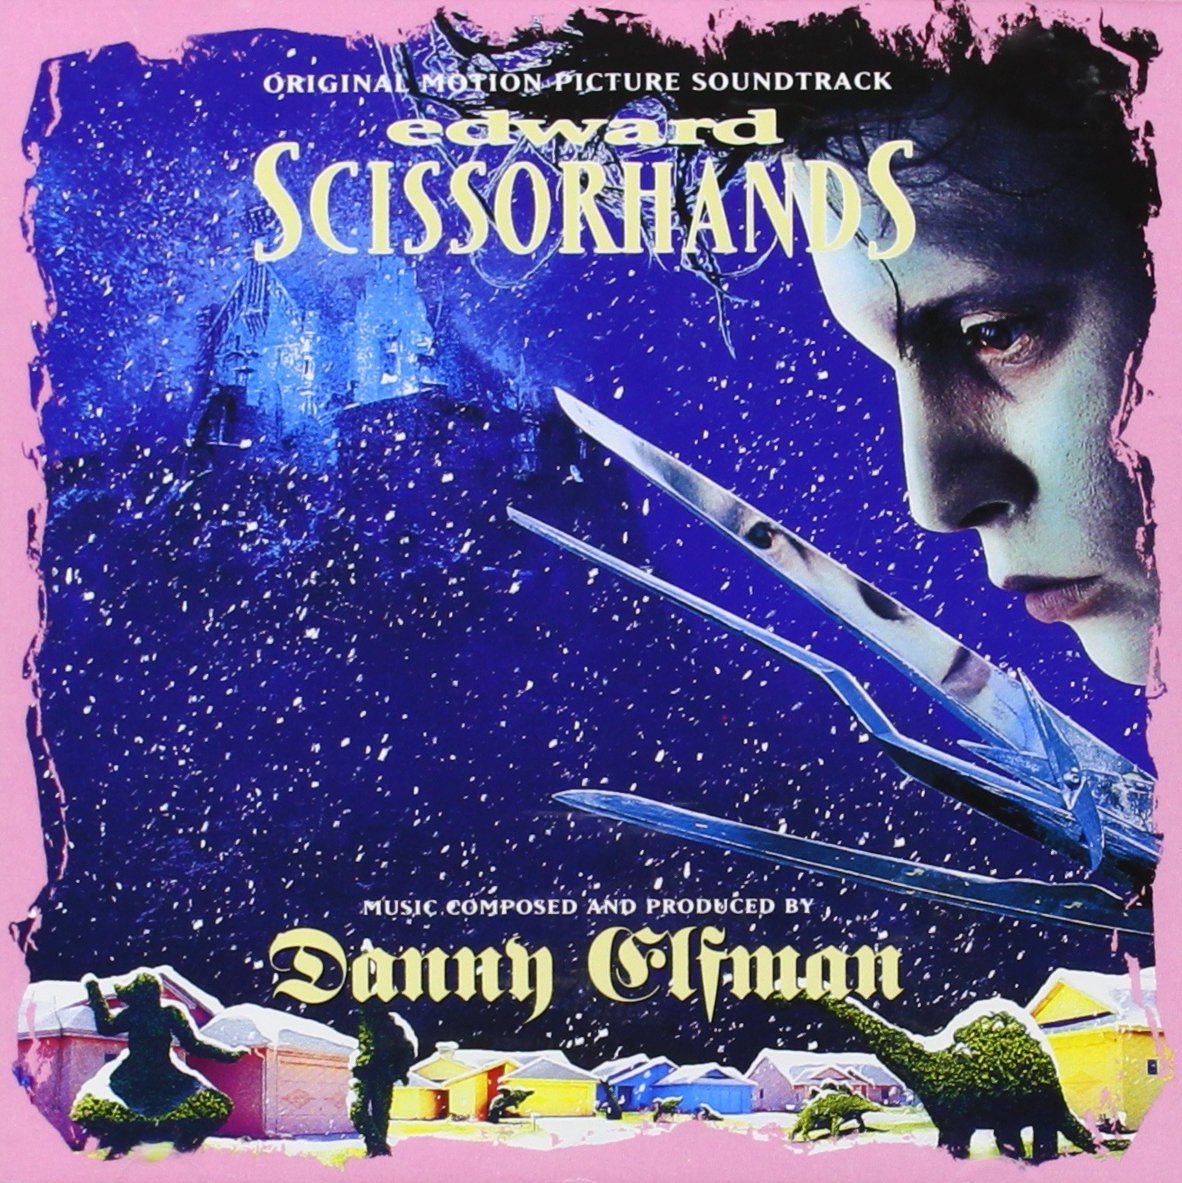 Edward scissorhands soundtrack